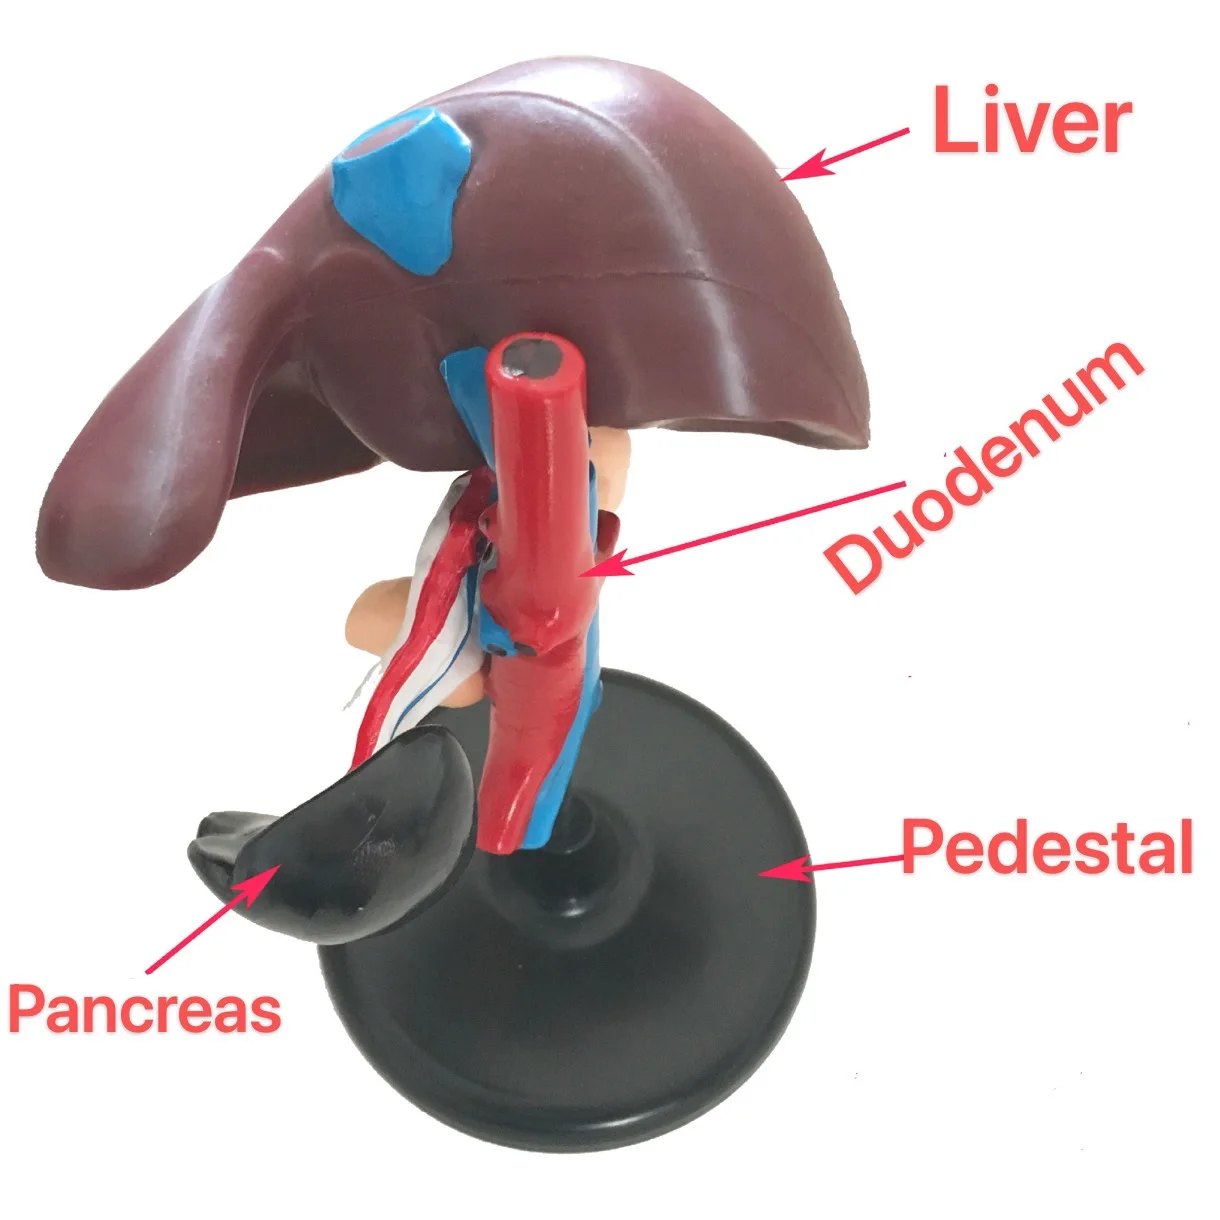 

Human liver, pancreas and duodenum model, liver anatomy model, human organ model